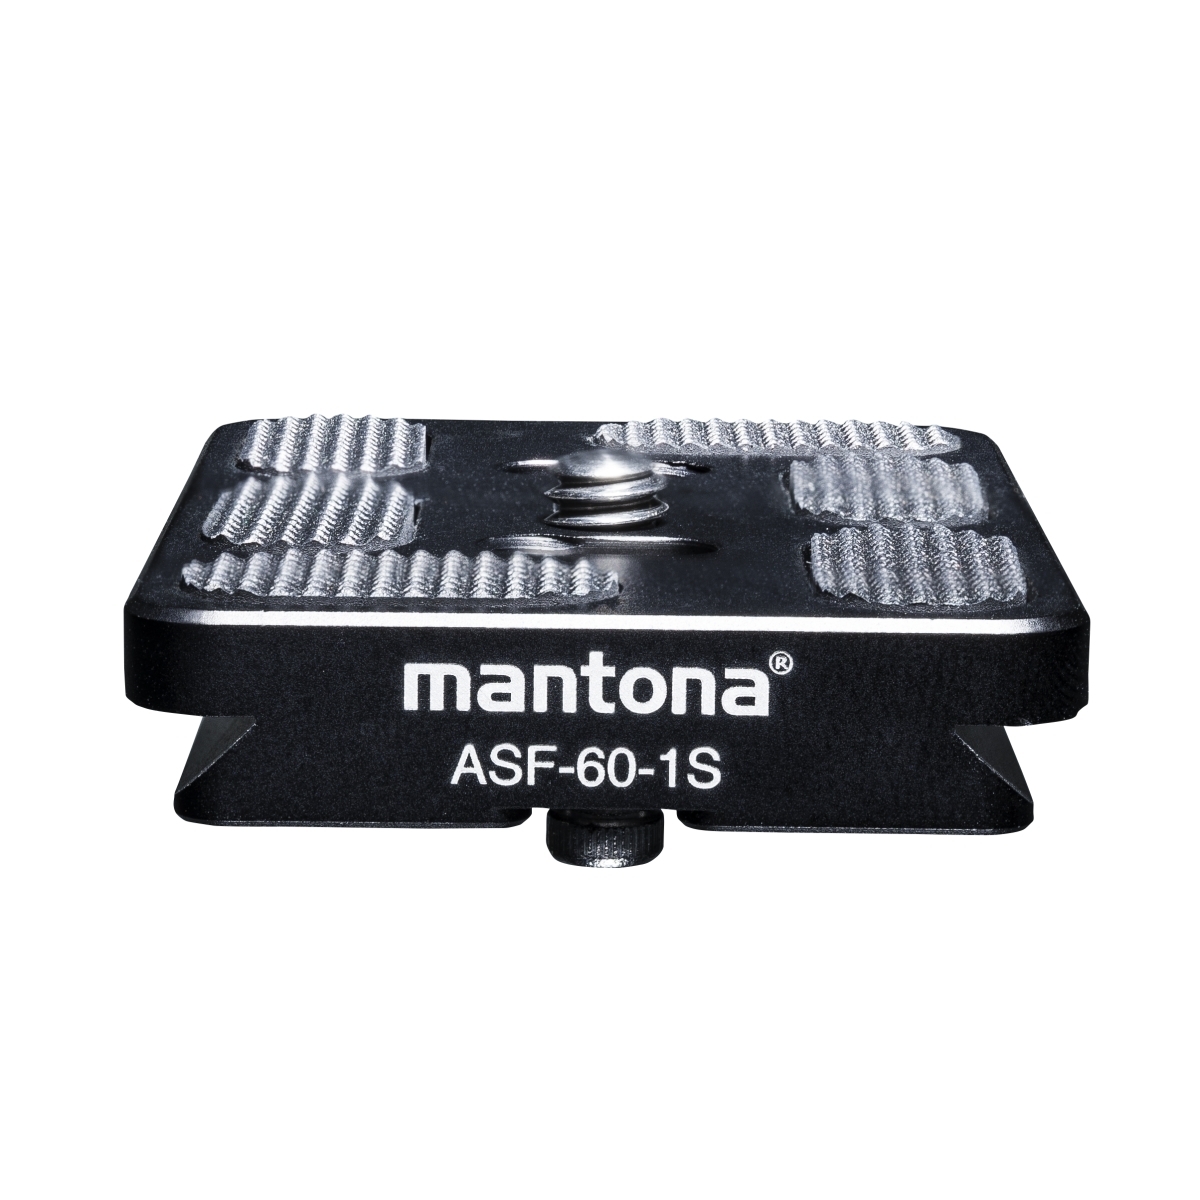 Mantona Fortress ASF-60-1S quick release plate